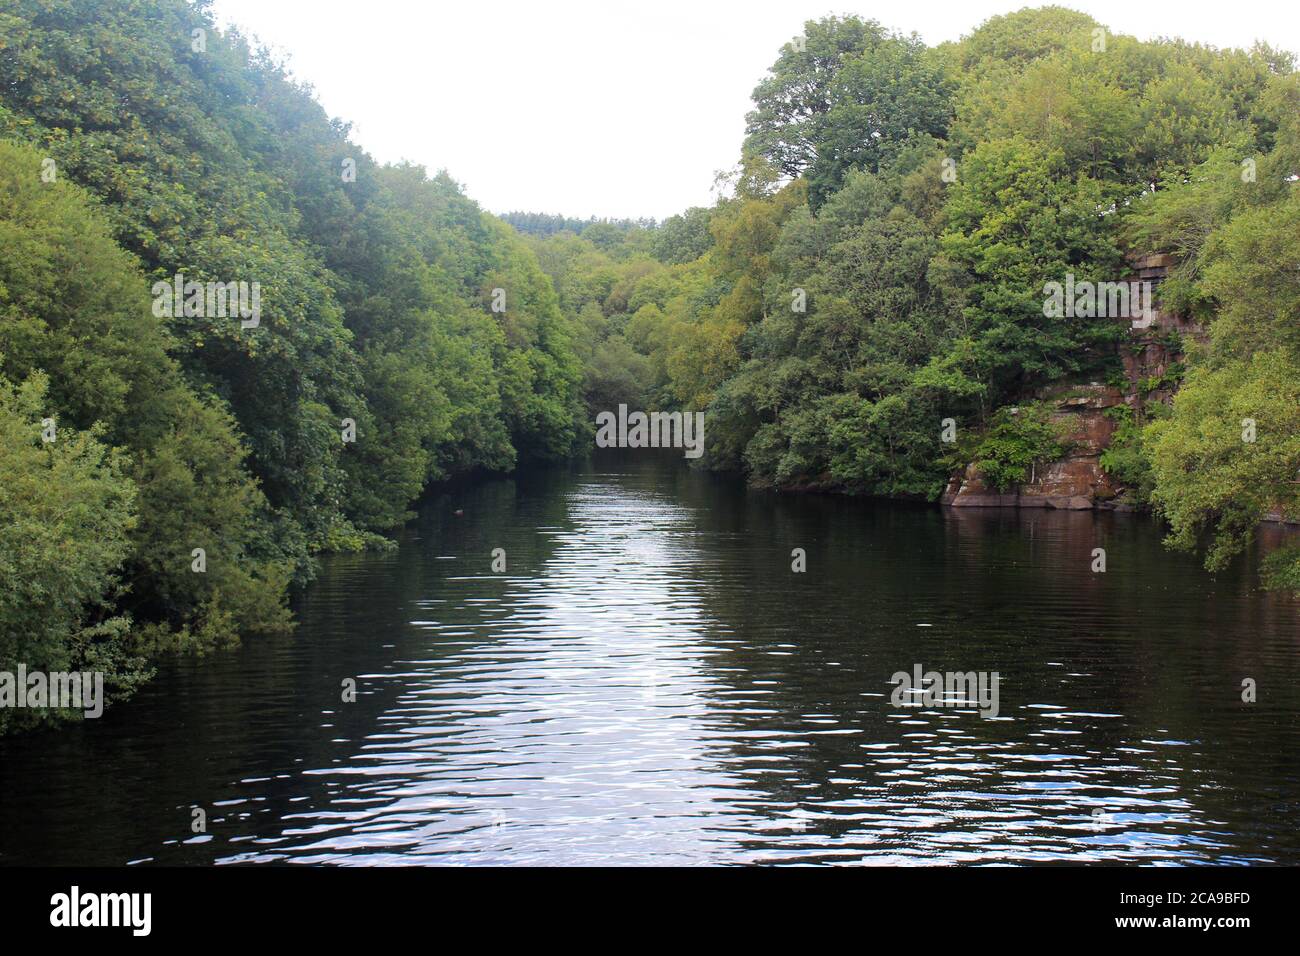 Anglezarke Reservoir attraverso alberi fitti e bassi, vista dal ponte di Anglezarke, Chorley, Inghilterra Foto Stock